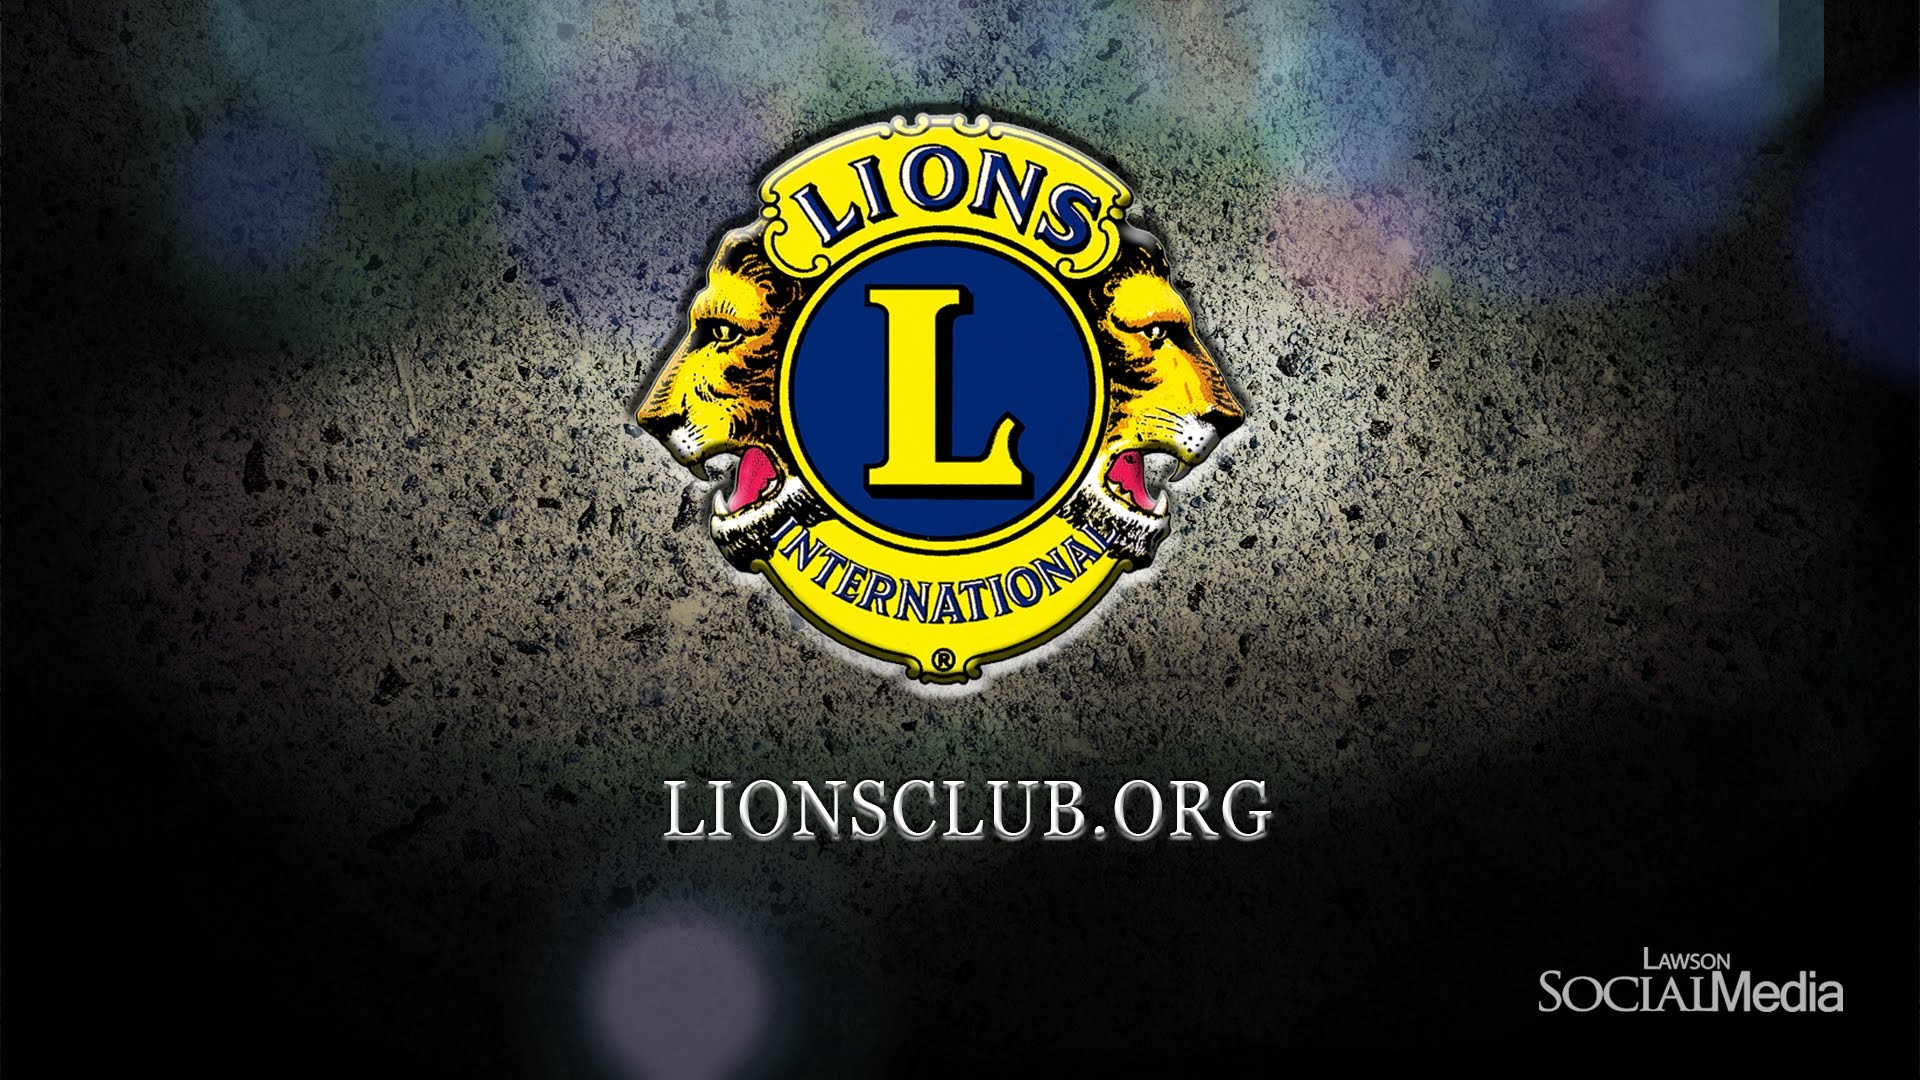 1920x1080 Lions Clubs International / Lions Clubs Membership / Lions Clubs  International Information - YouTube